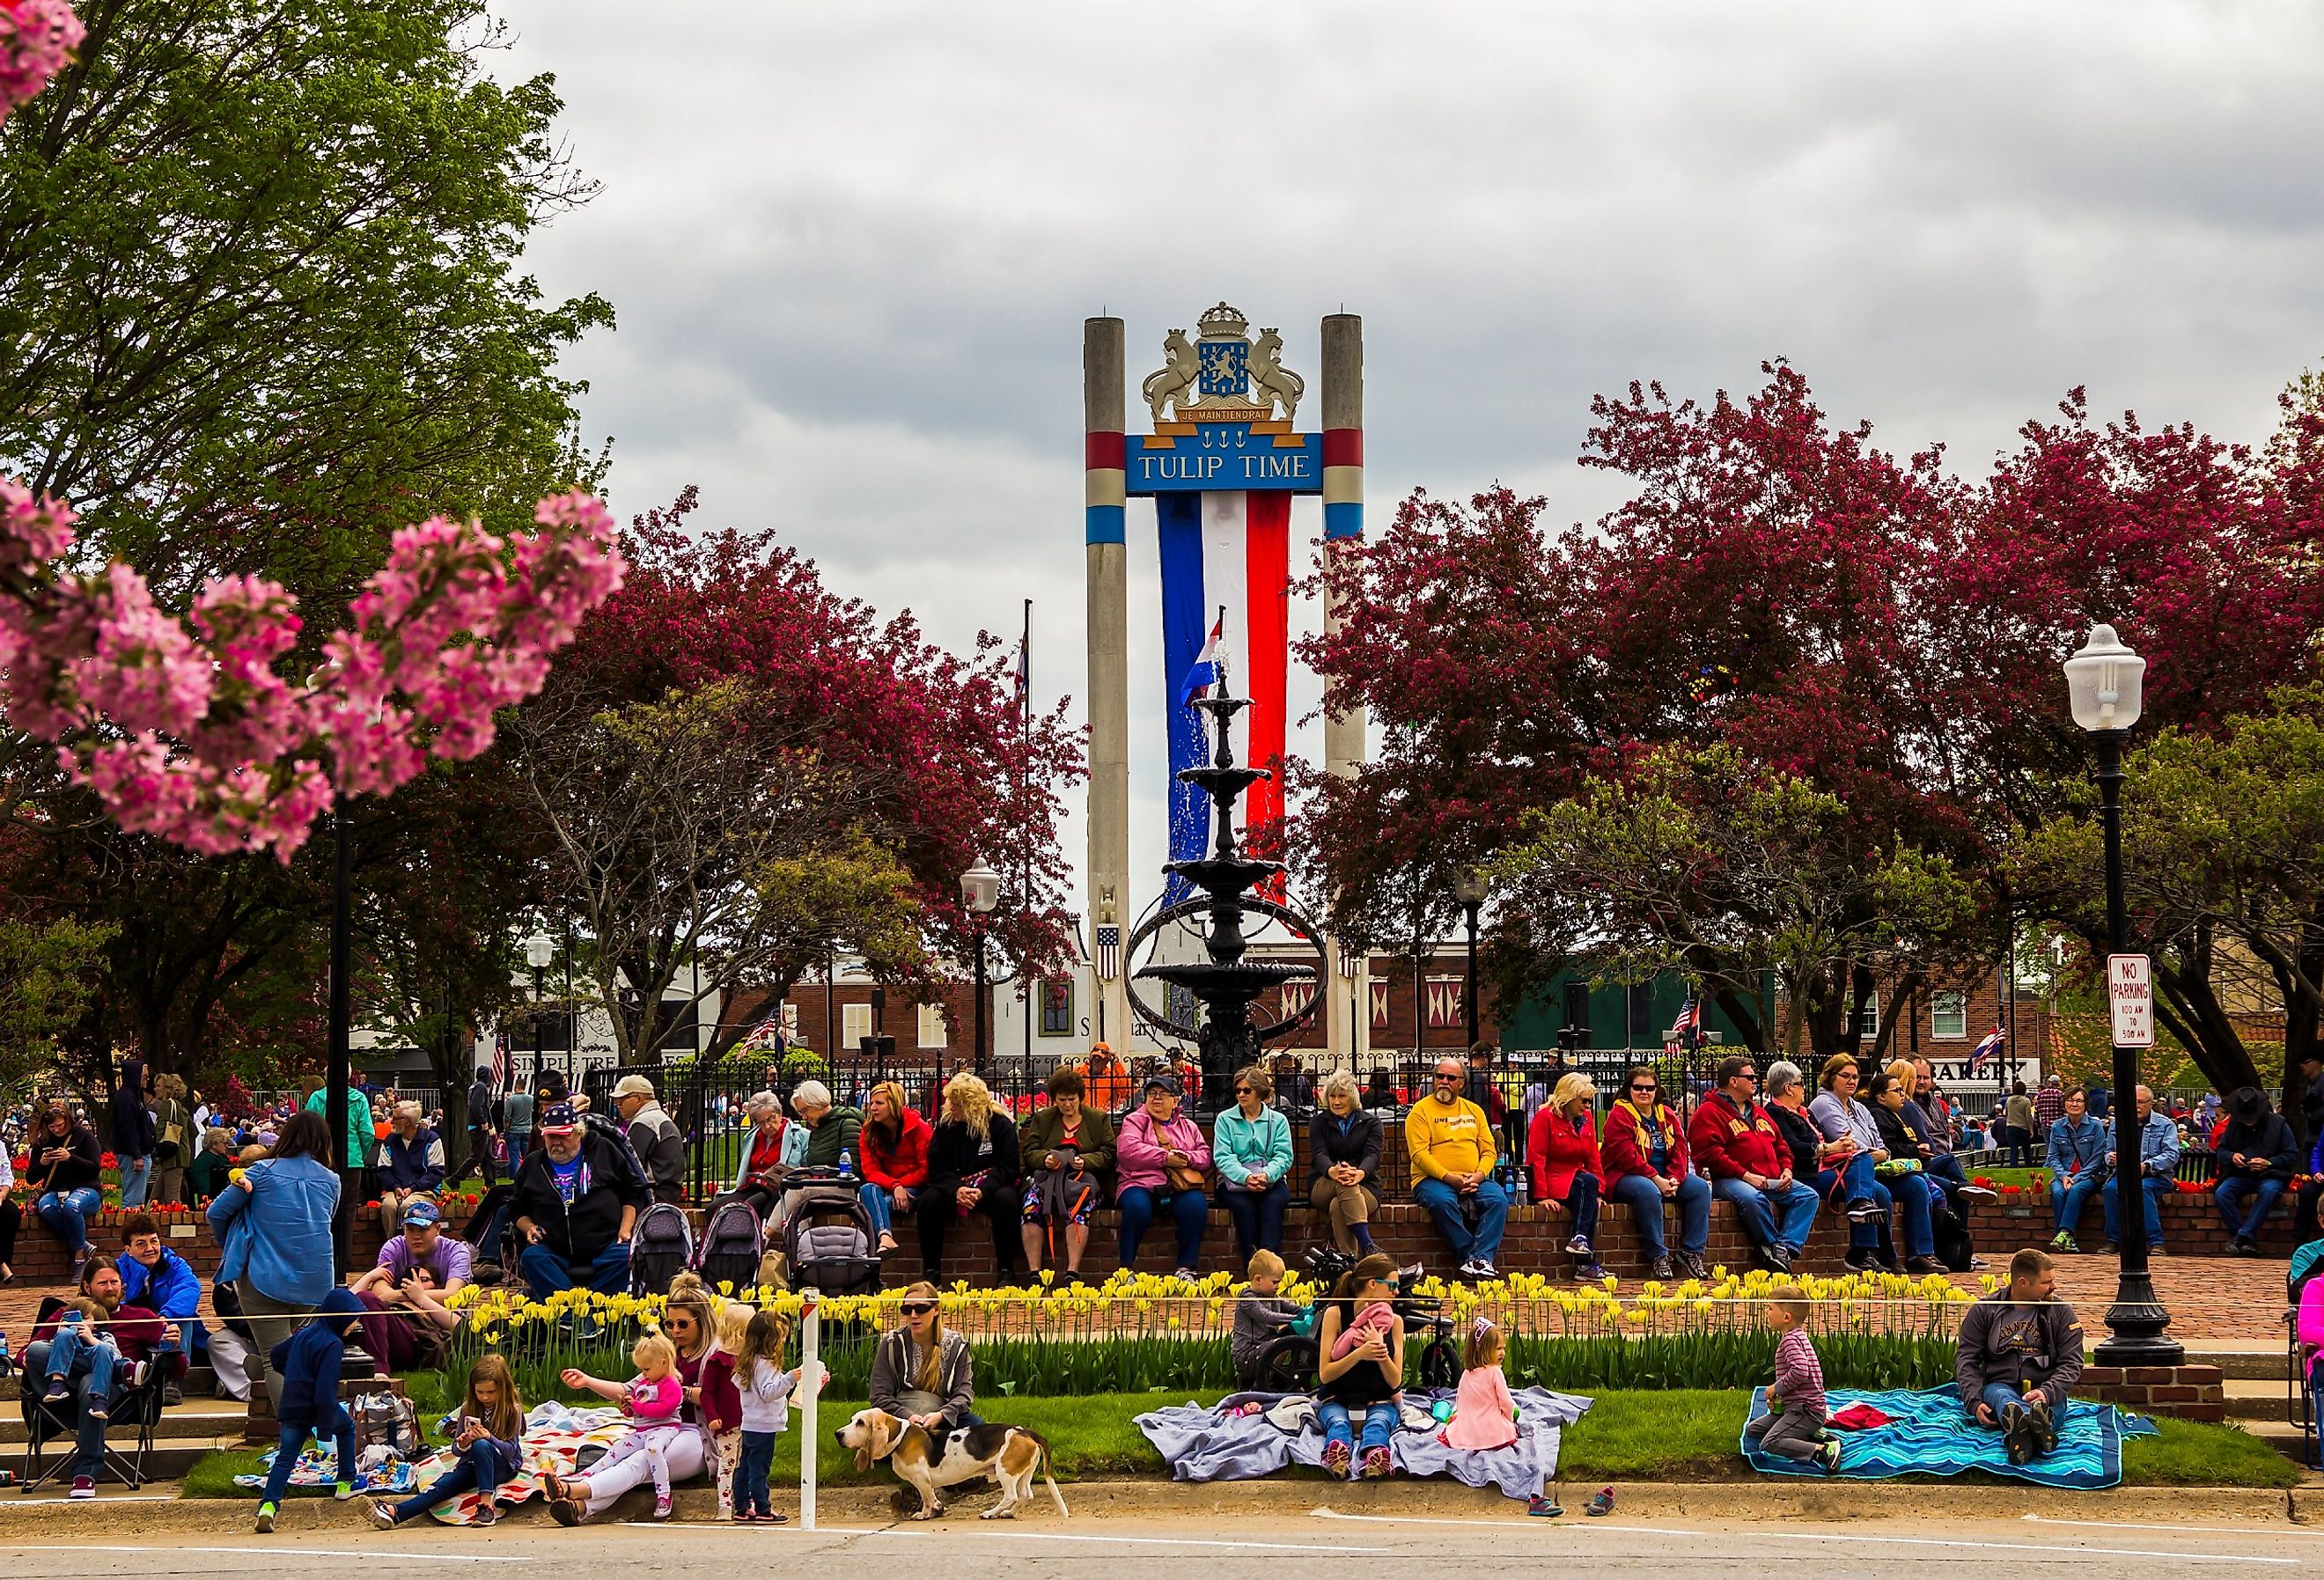 Tulip Time Festival Parade of Pella's dutch community, Iowa. Image credit yosmoes815 via Shutterstock